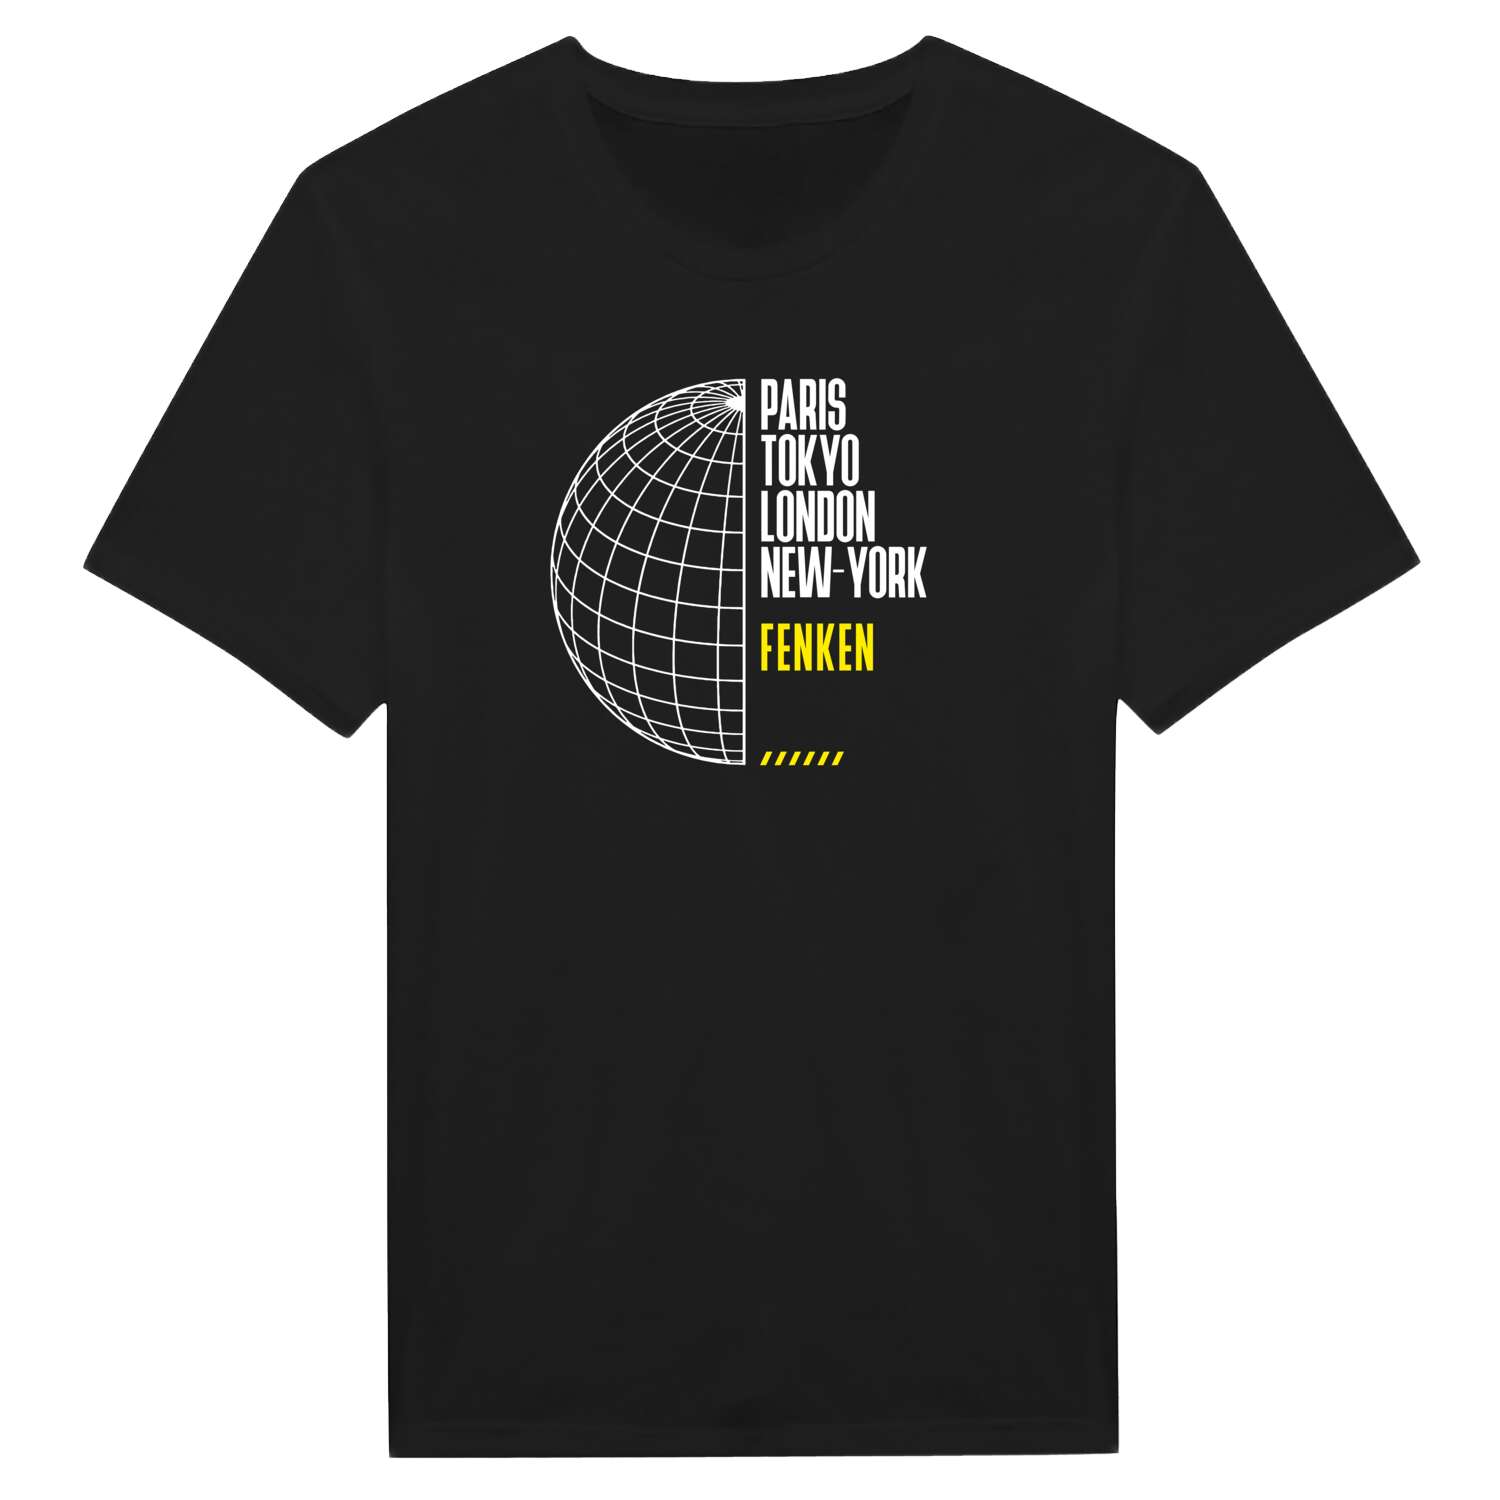 Fenken T-Shirt »Paris Tokyo London«